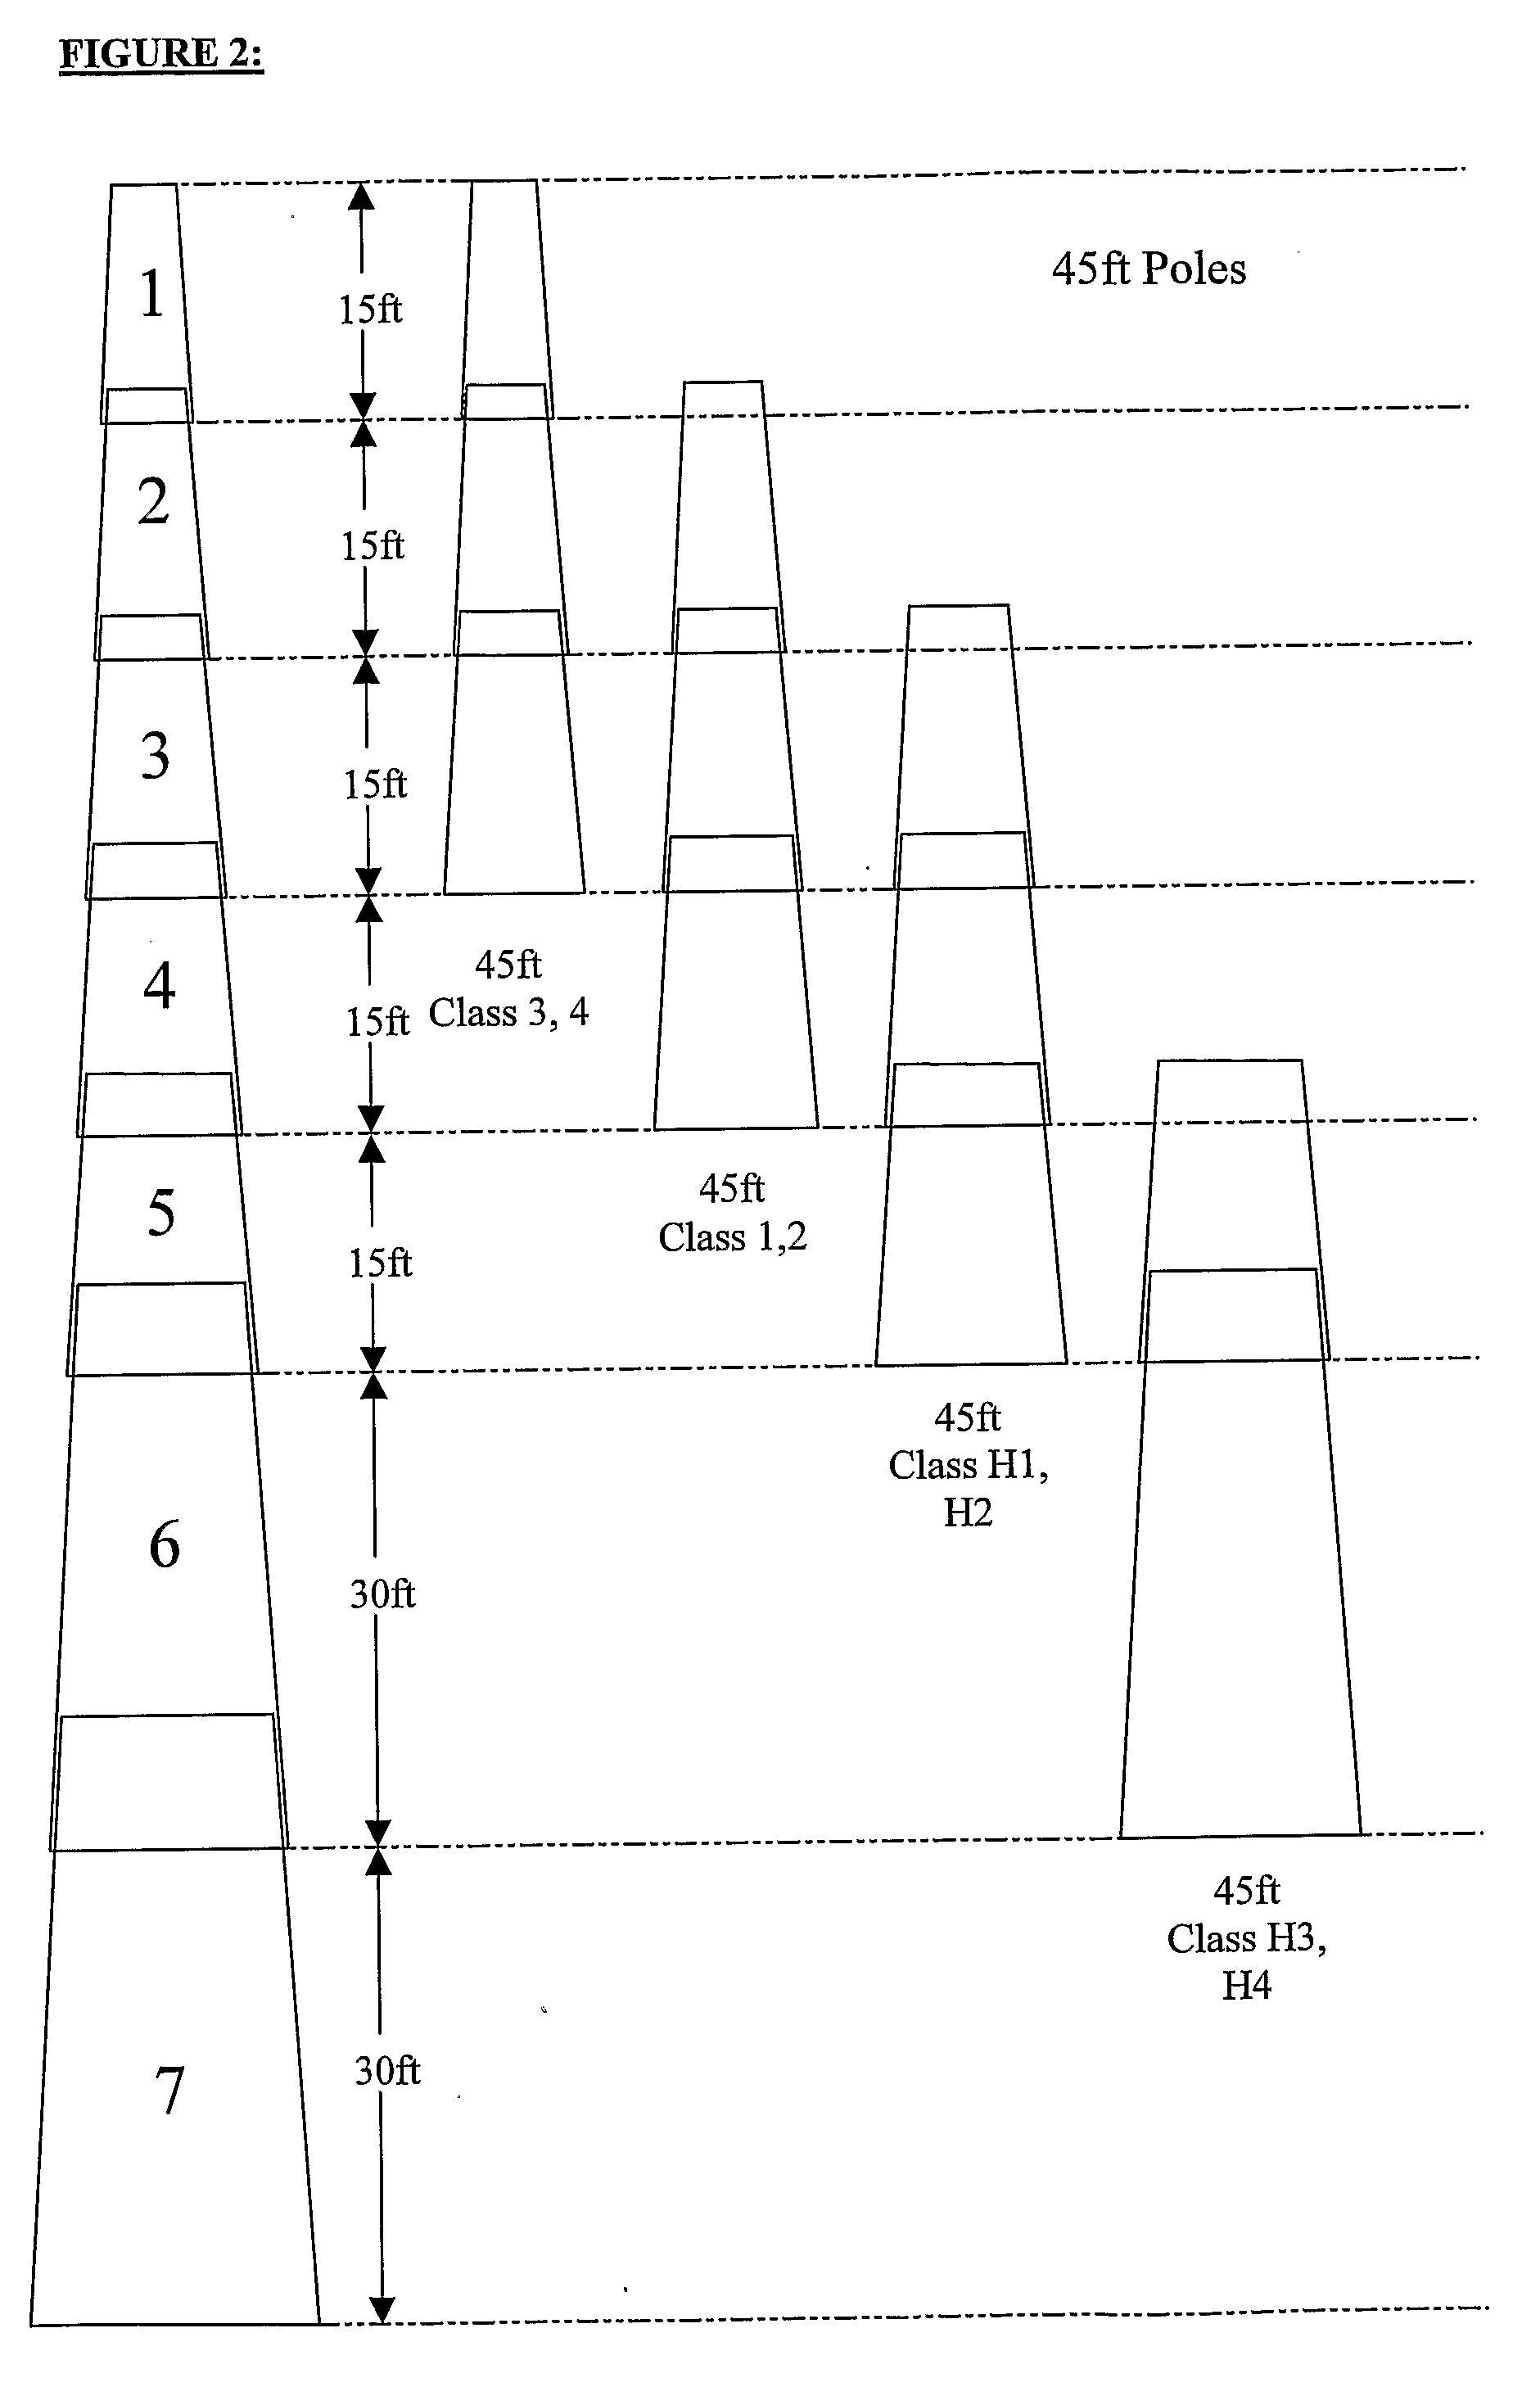 Method of modular pole construction and modular pole assembly